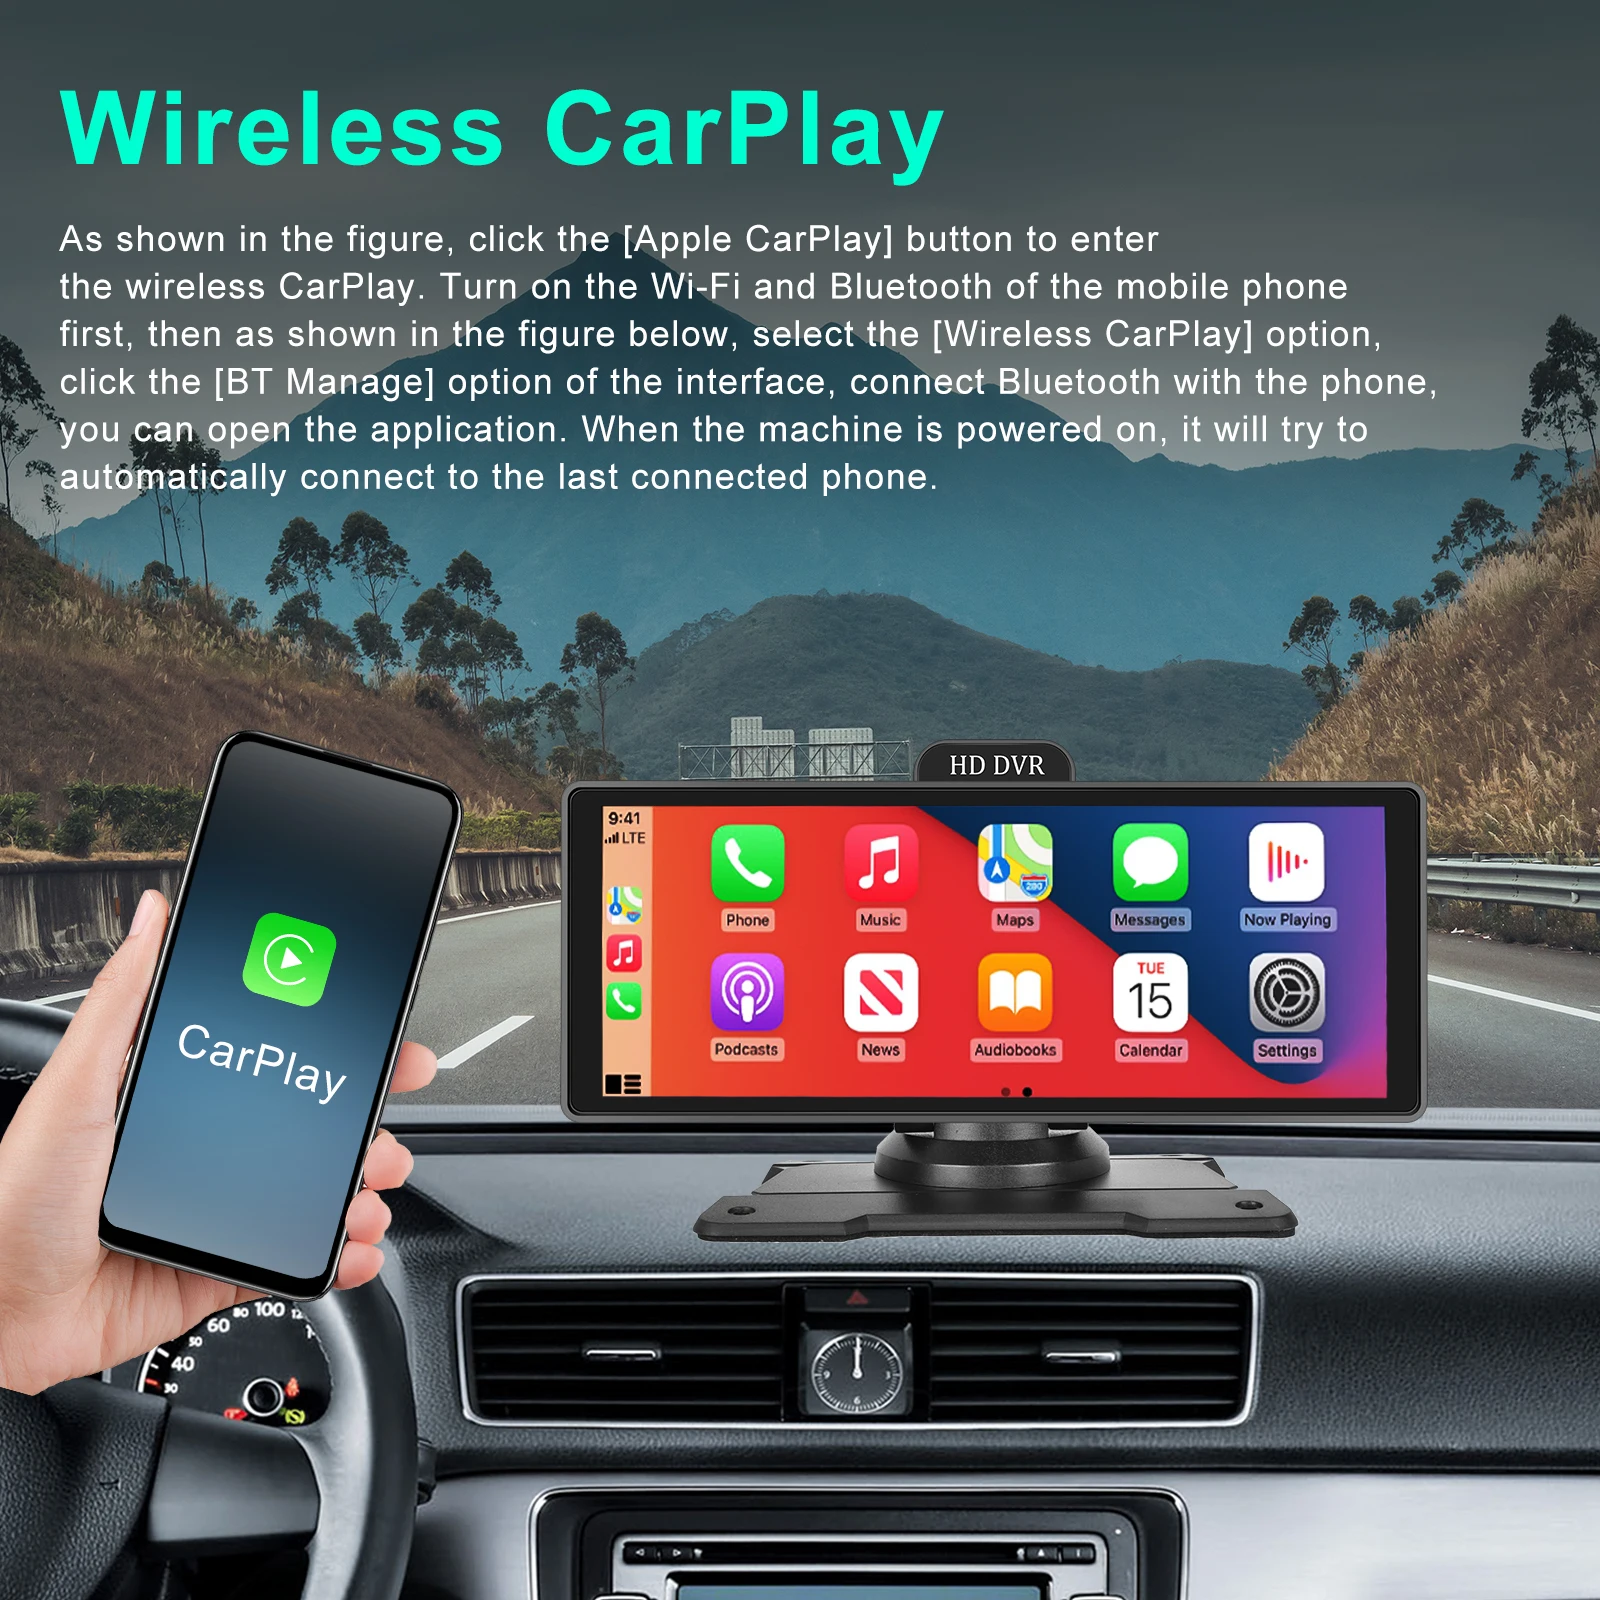  10.26'' Car Stereo with 4K Dashcam, Wireless Carplay & Android  Auto, Backup Camera, Bluetooth, GPS Navigation : Electronics